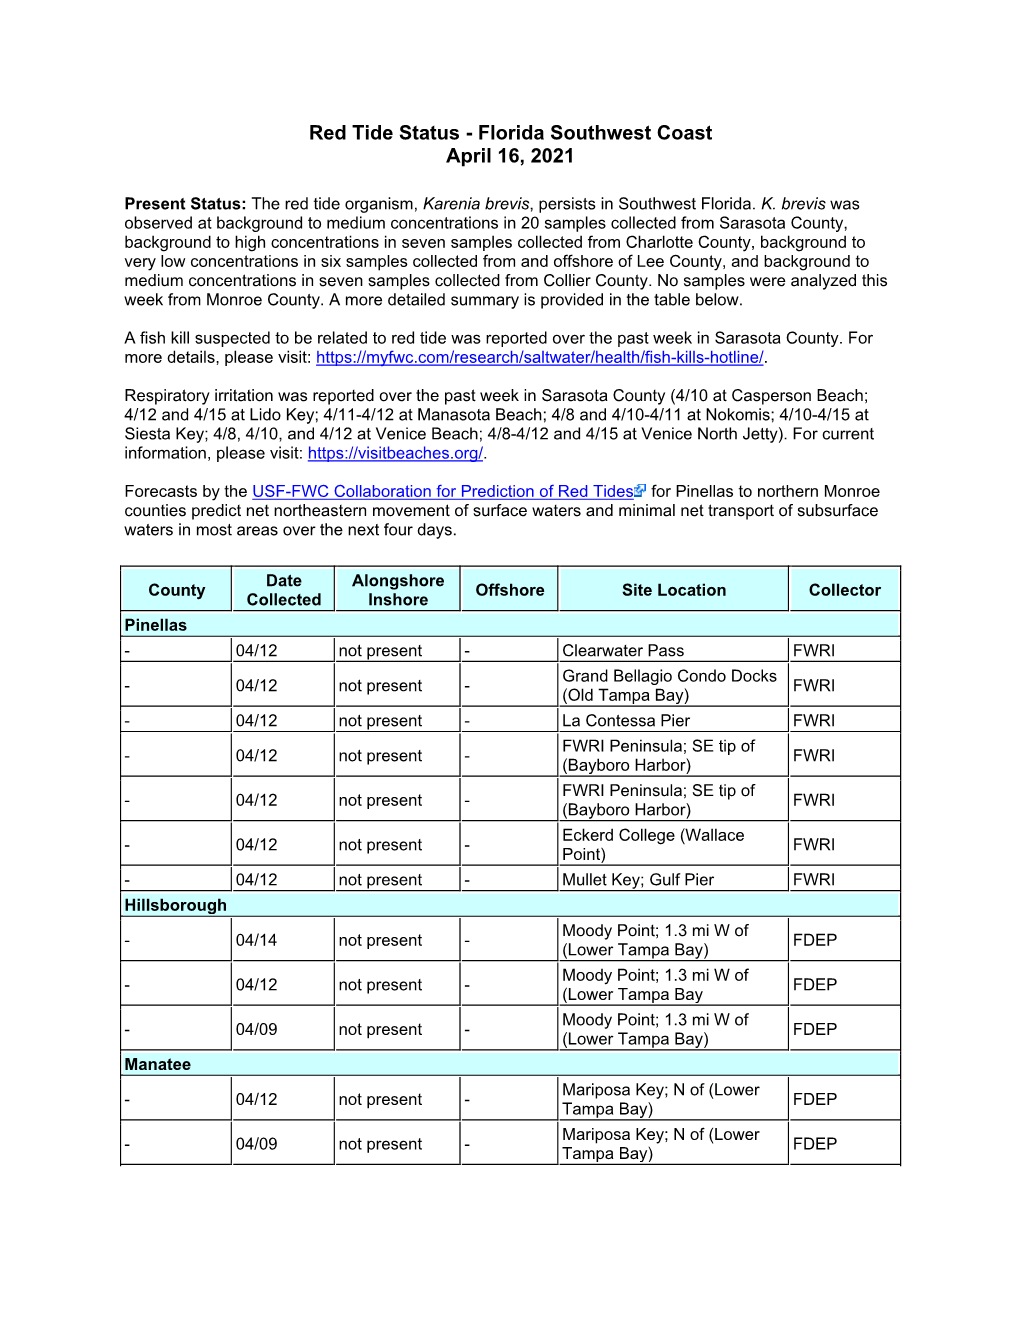 Southwest Coast Red Tide Status Report April 16, 2021